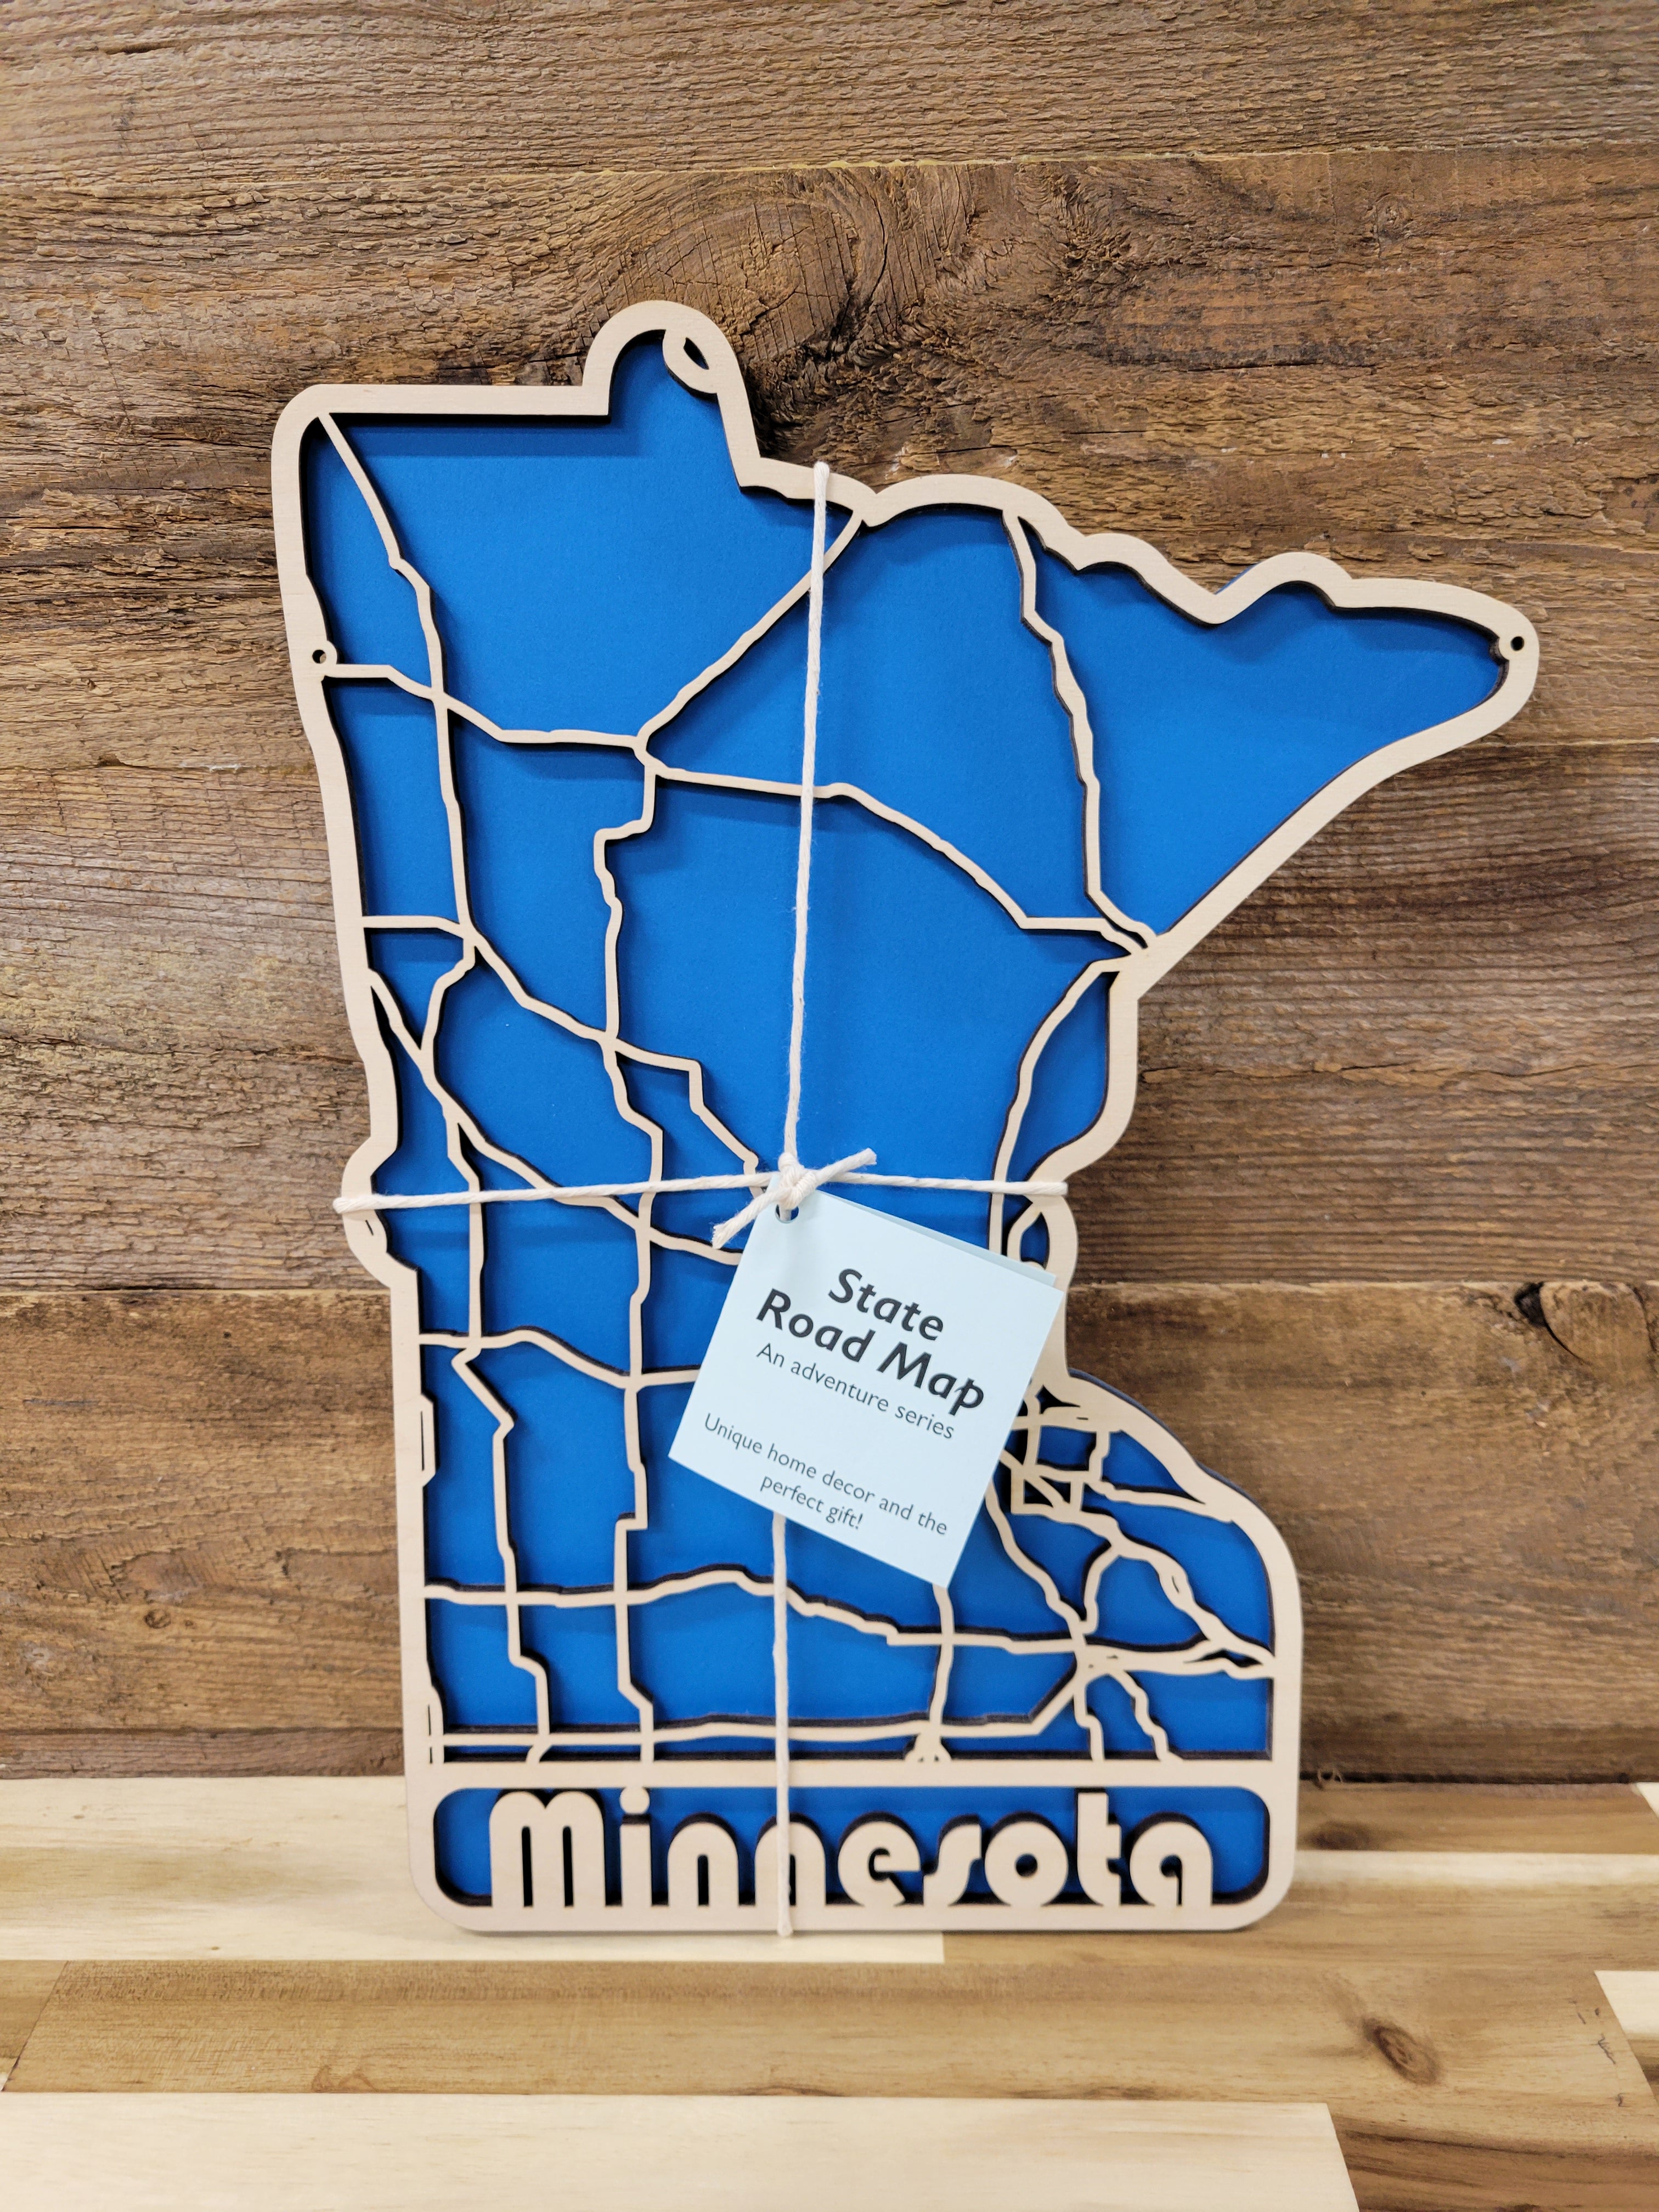 Minnesota State Road Map – Back Alley Studios